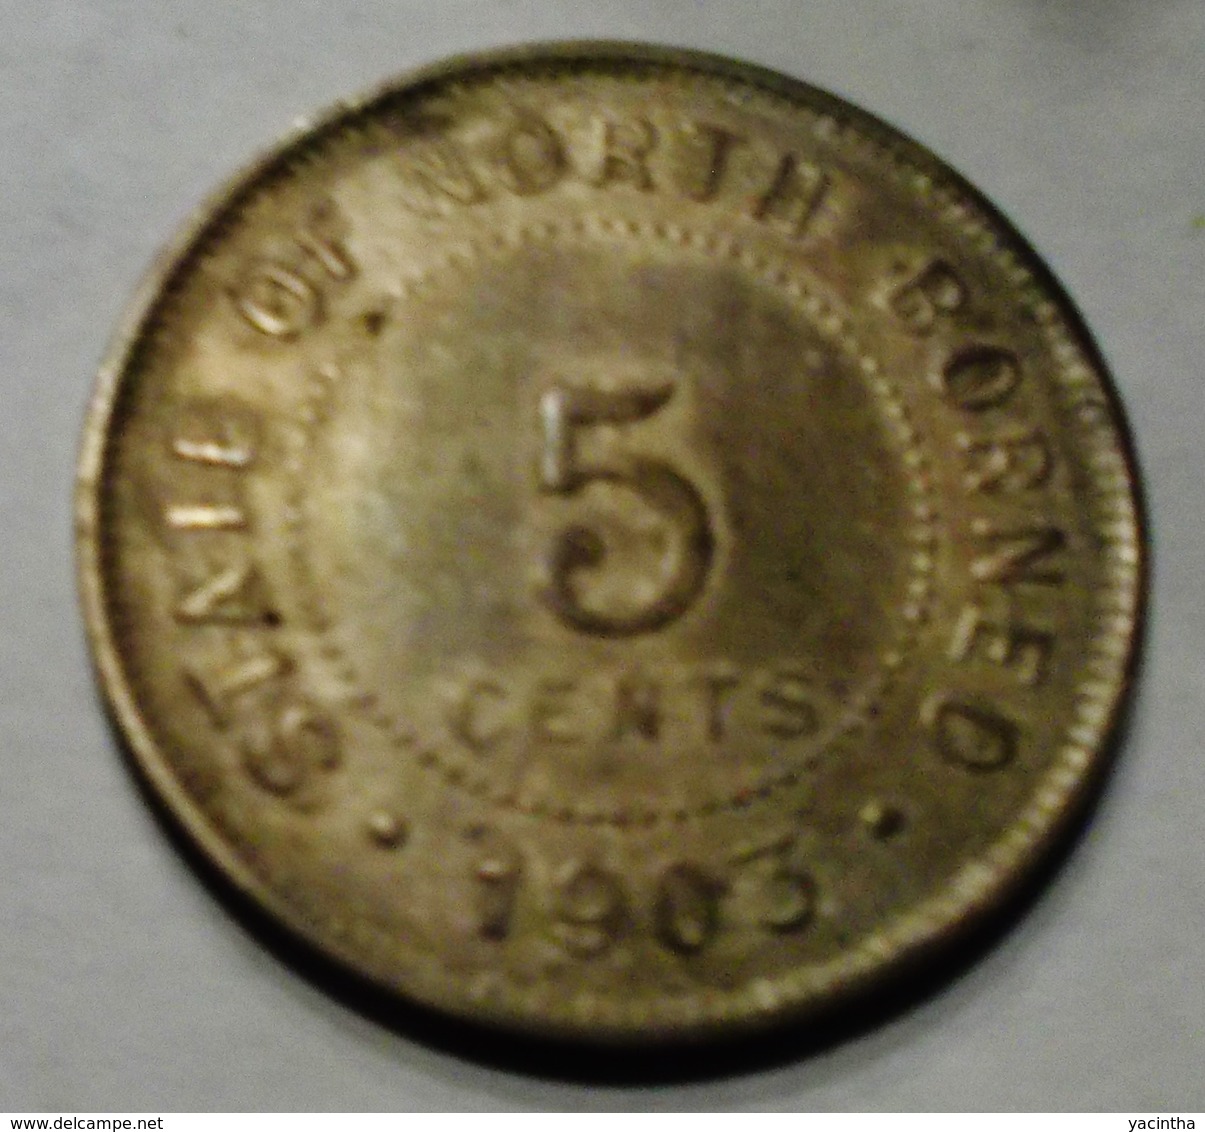 @Y@  Brits Borneo  5 Cent    1903  (3413) - Malaysie